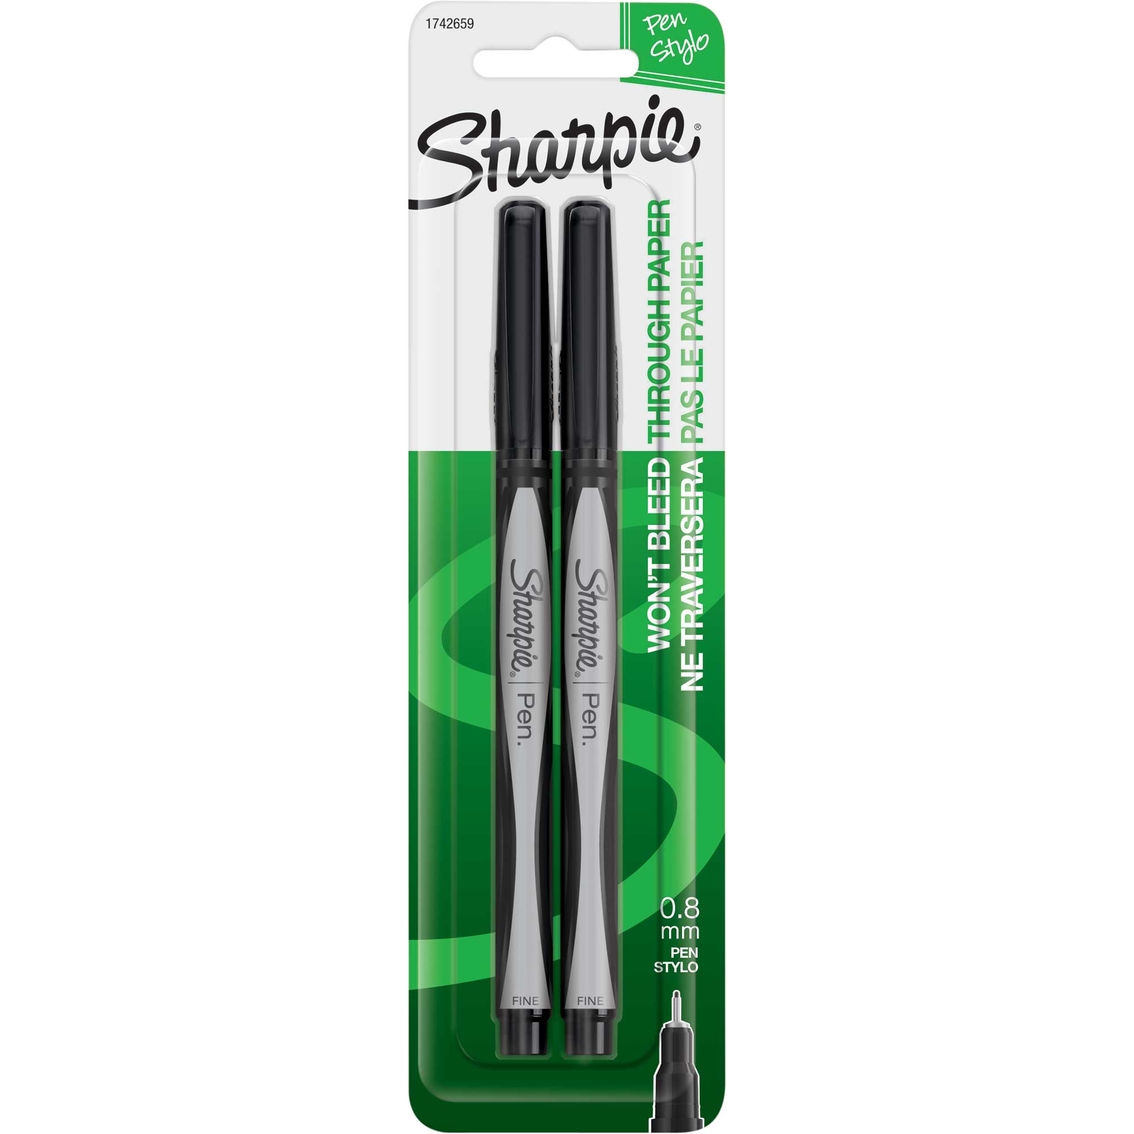 Sharpie Fine Point Black Pens